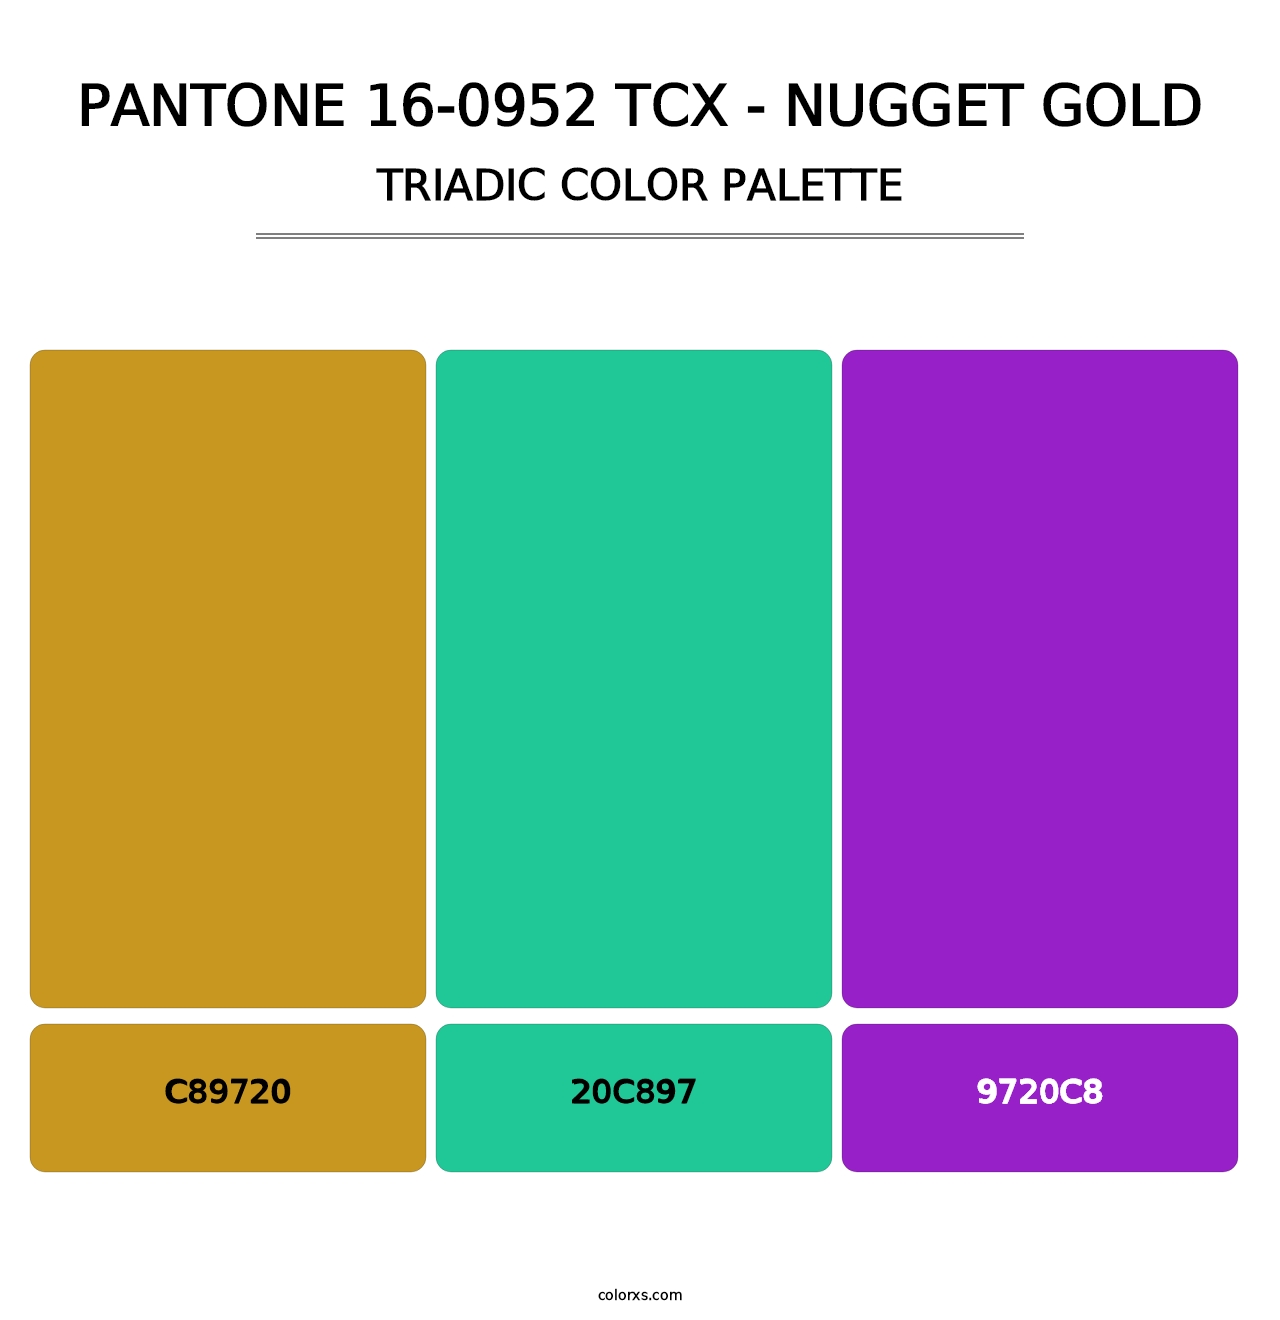 PANTONE 16-0952 TCX - Nugget Gold - Triadic Color Palette